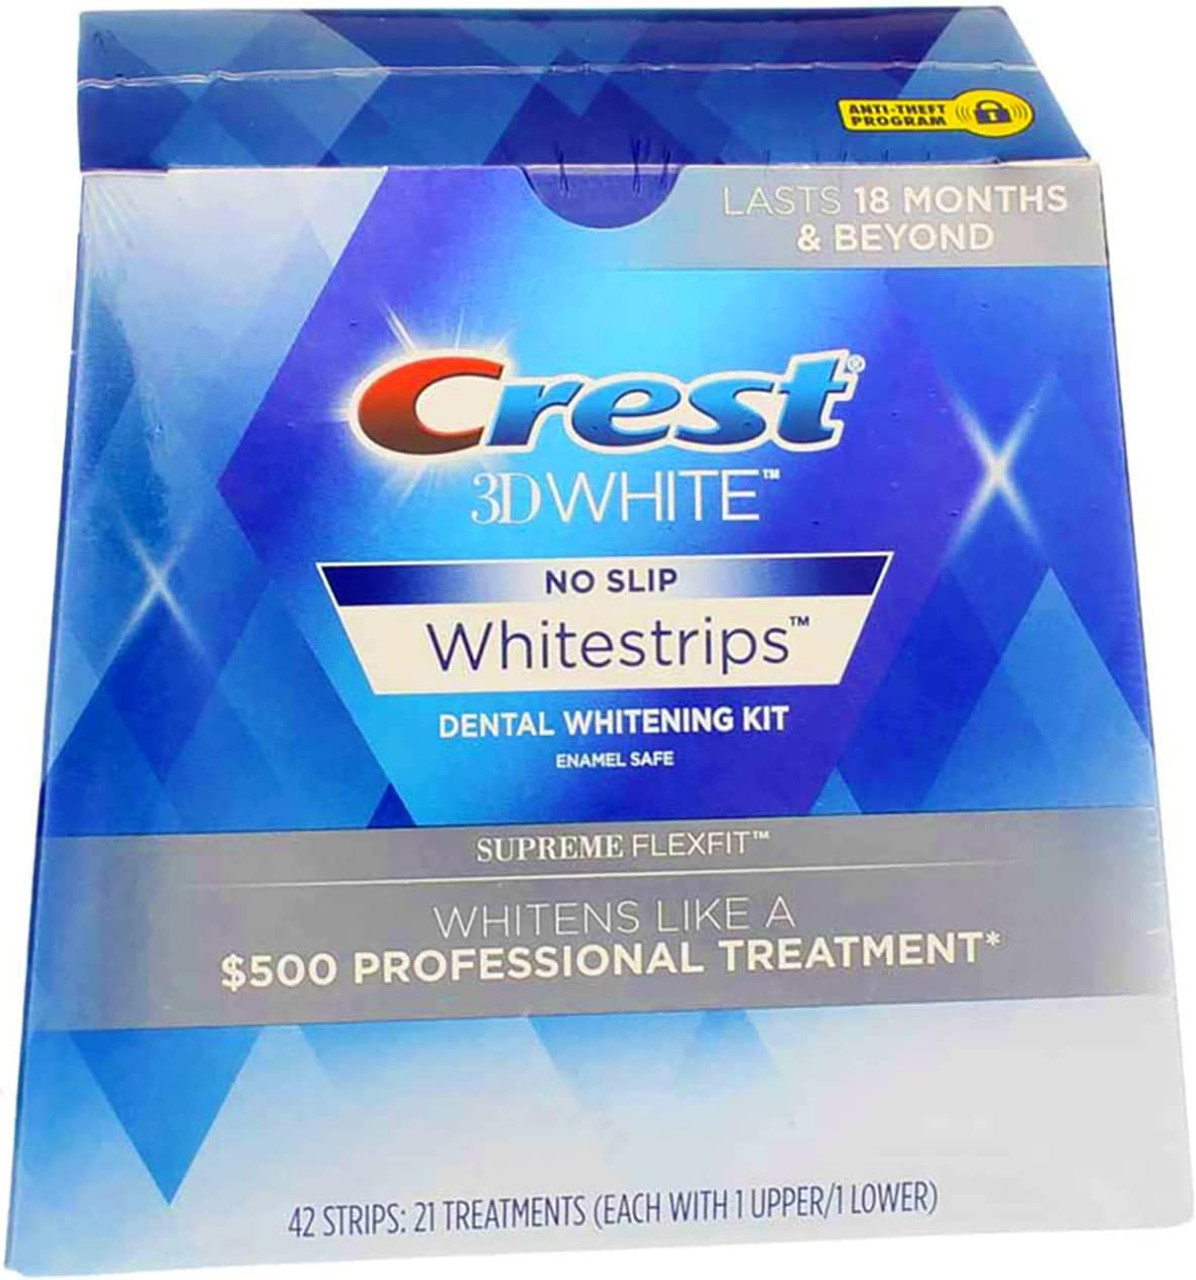 Crest 3D White Whitestrips Dental Whitening Kit, Advanced Seal, Professional Effects - 20 treatments